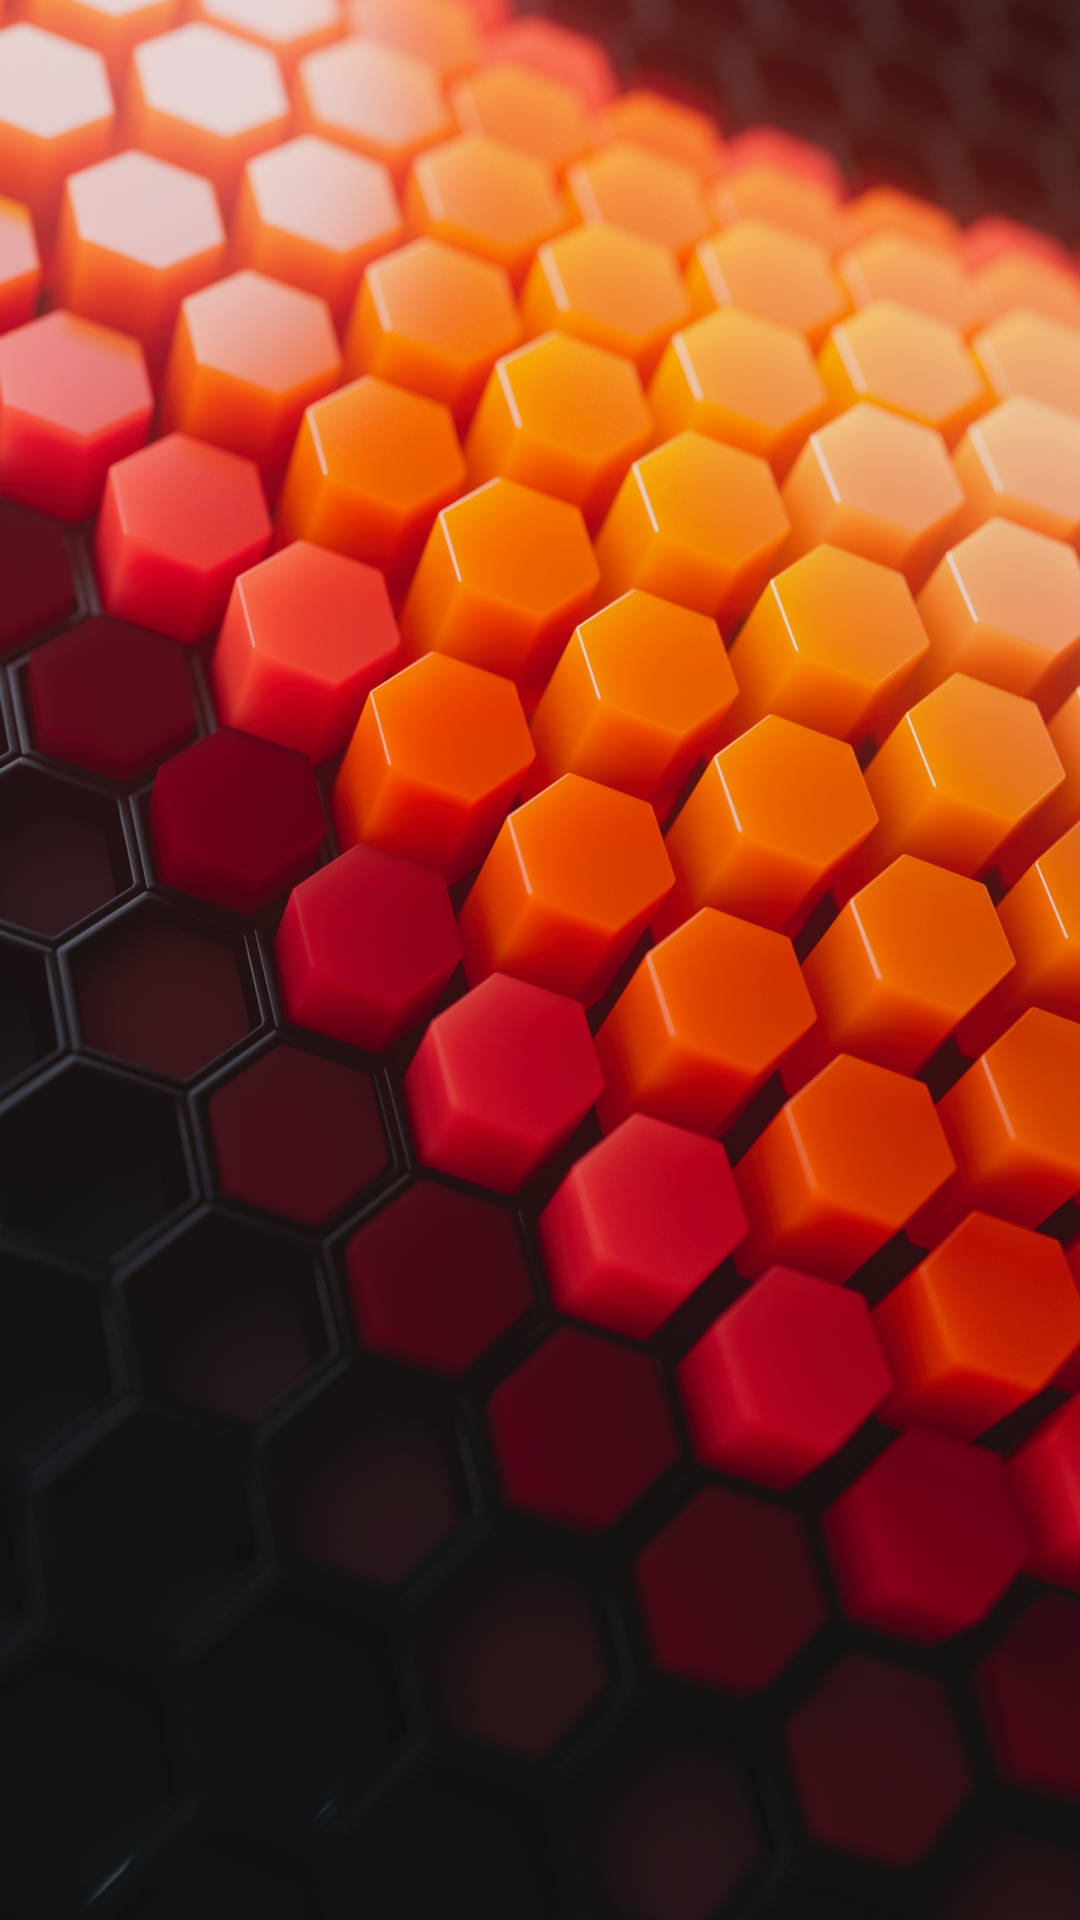 Innovative Orange Phone with Hexagonal Design Wallpaper